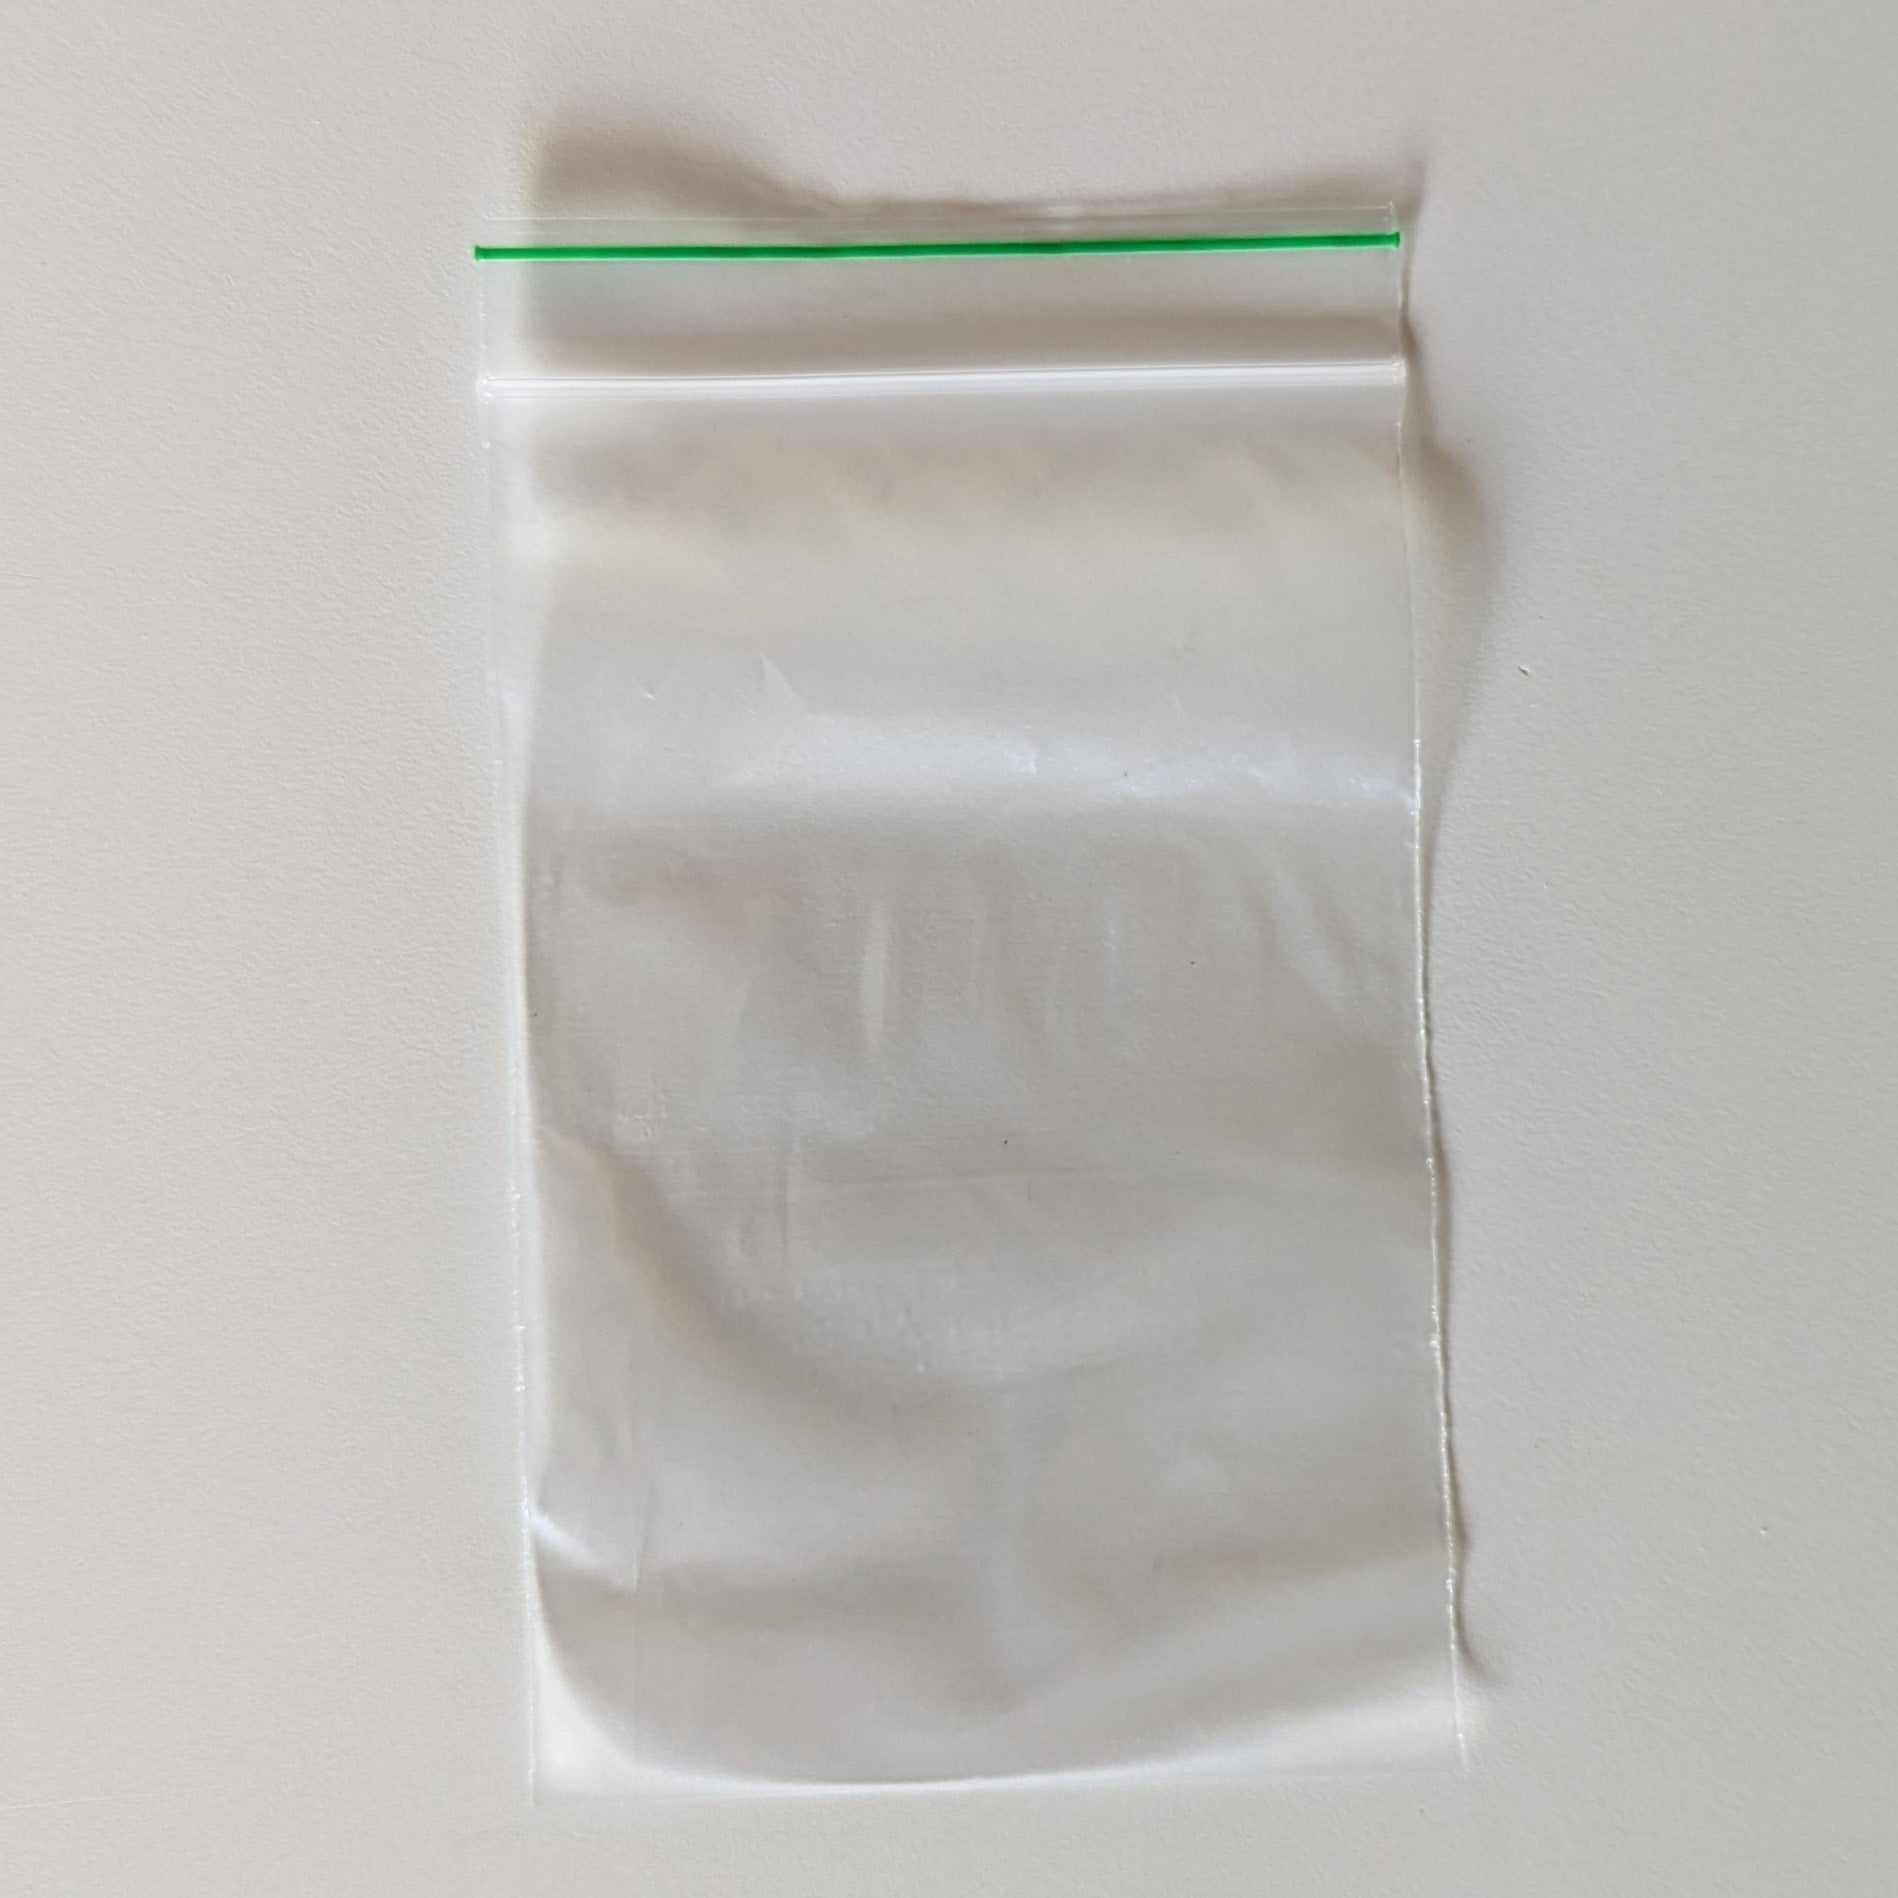 4 x 6 x 2 mil Clear Eco-Friendly Poly Ziplock Bags